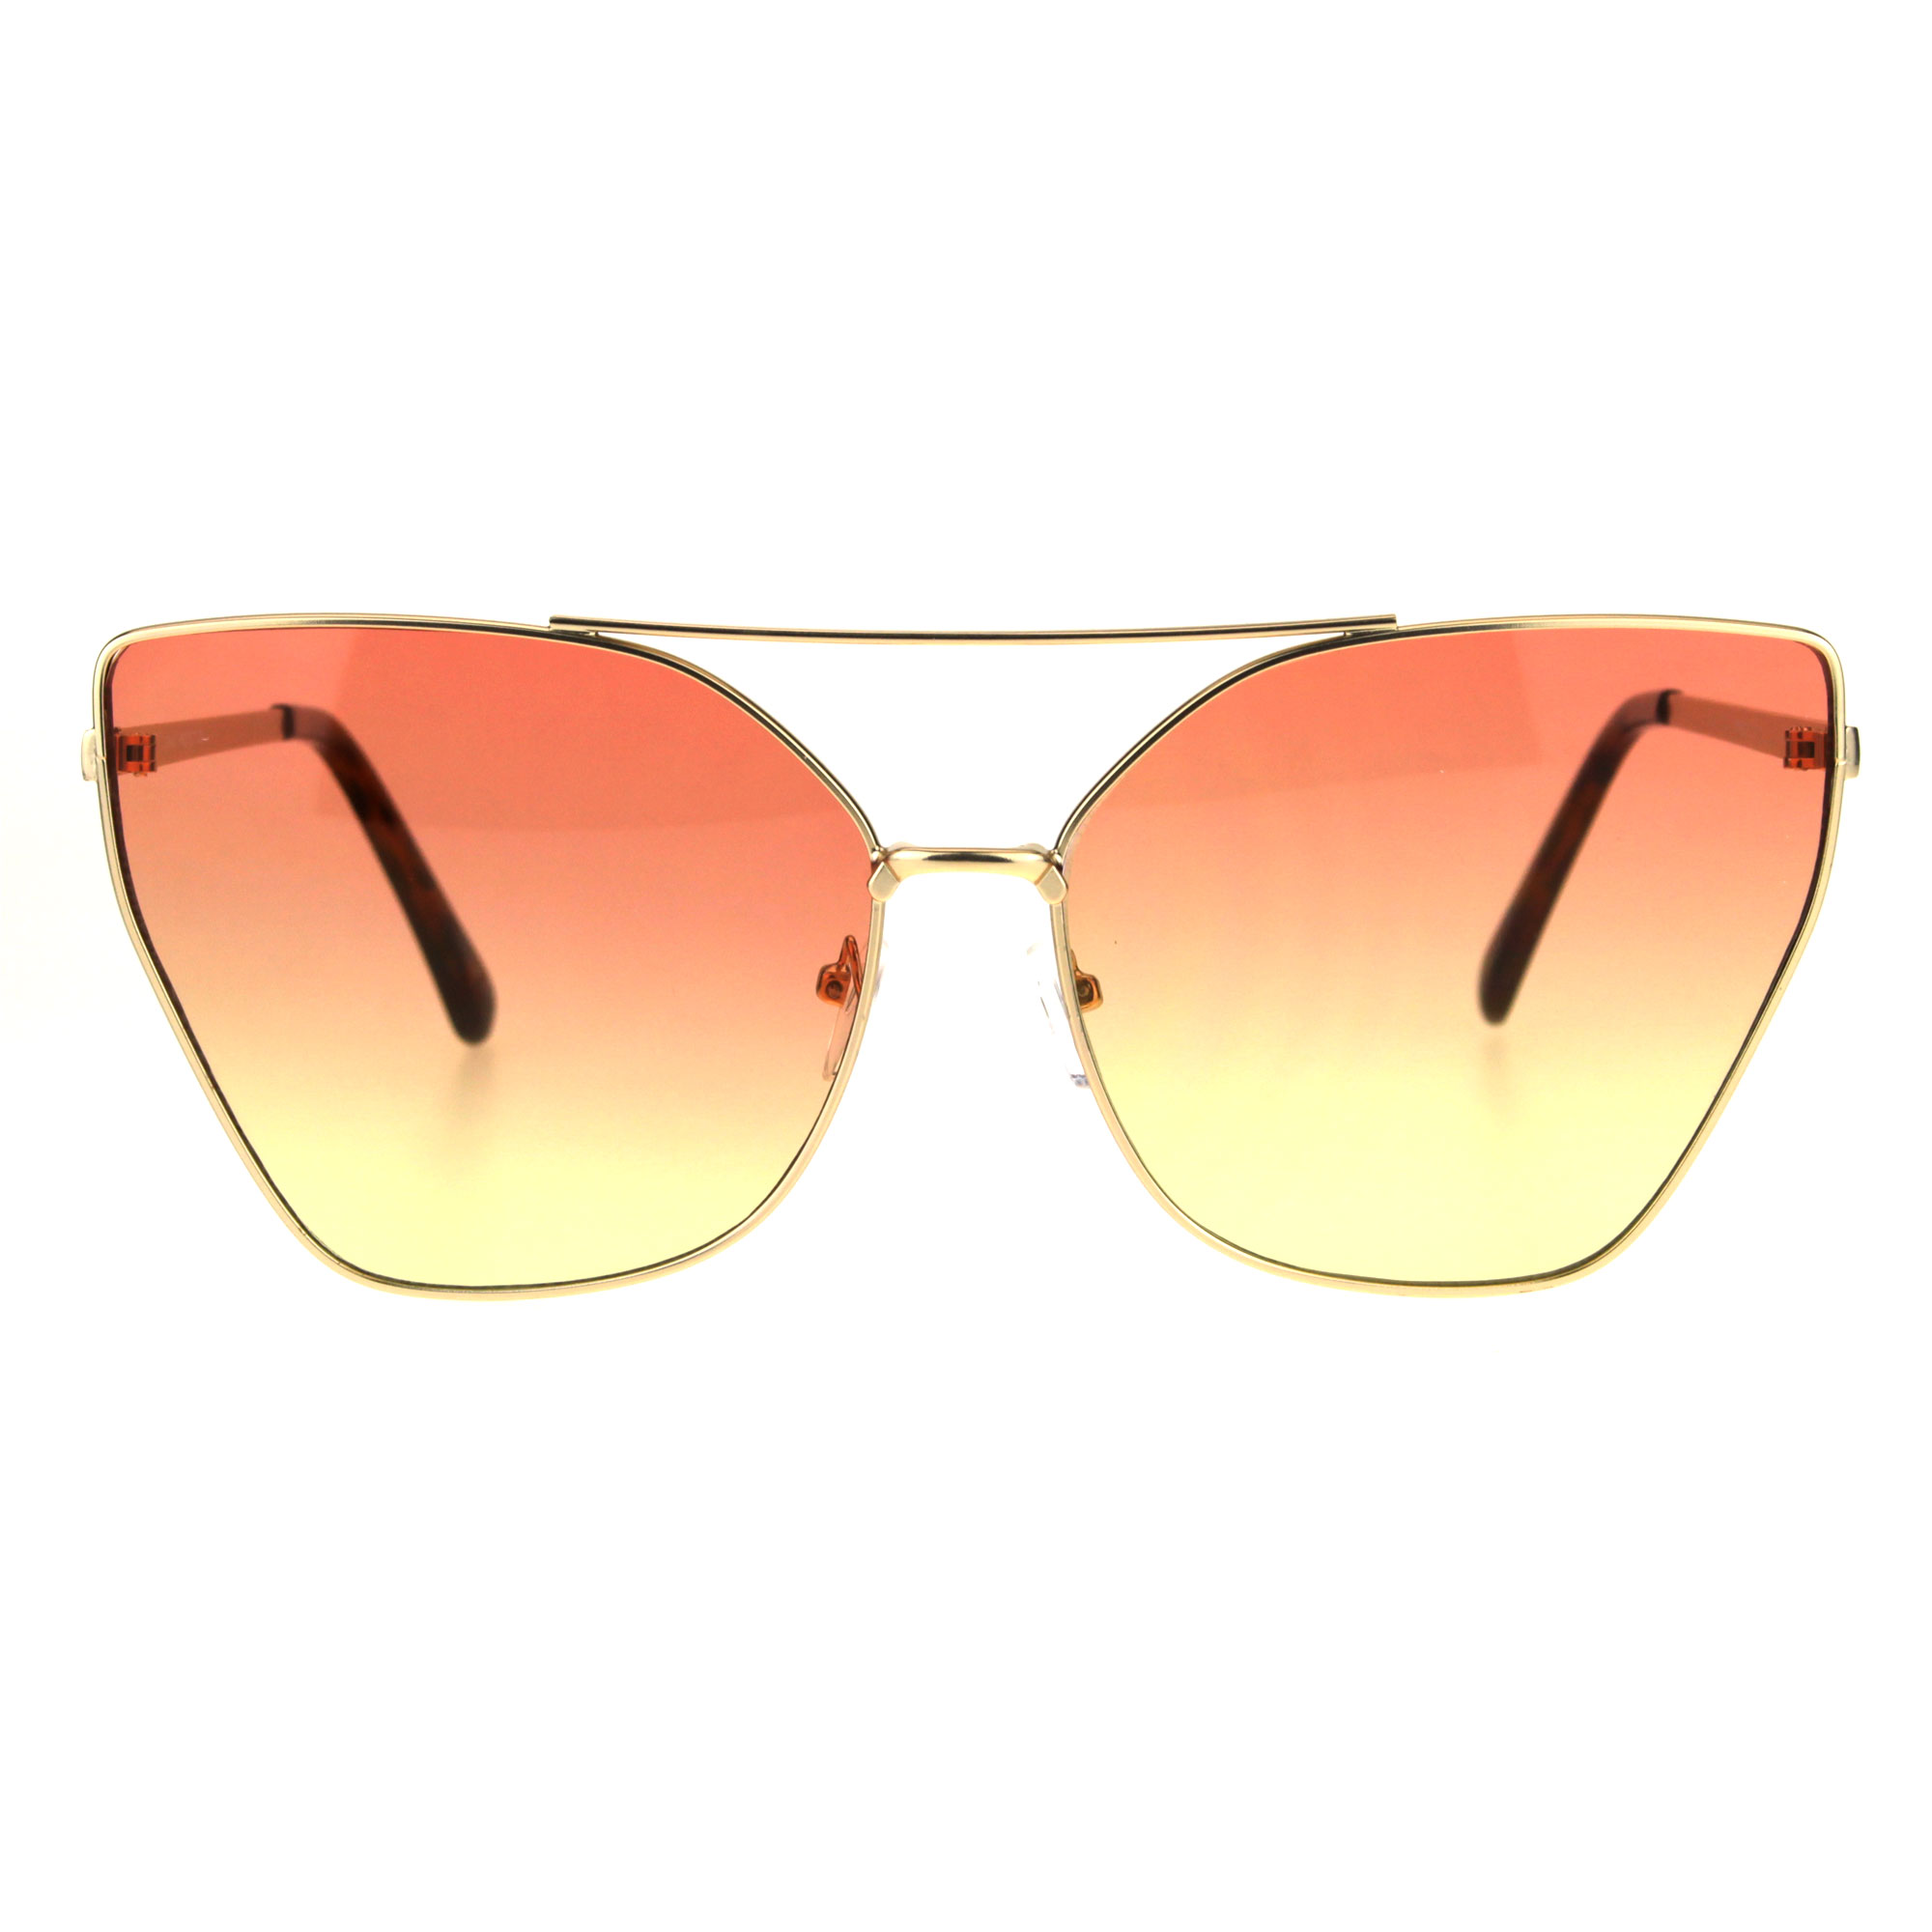 Womens Color Oceanic Gradient Metal Cat Eye Gothic Sunglasses Gold Orange Yellow - image 1 of 4